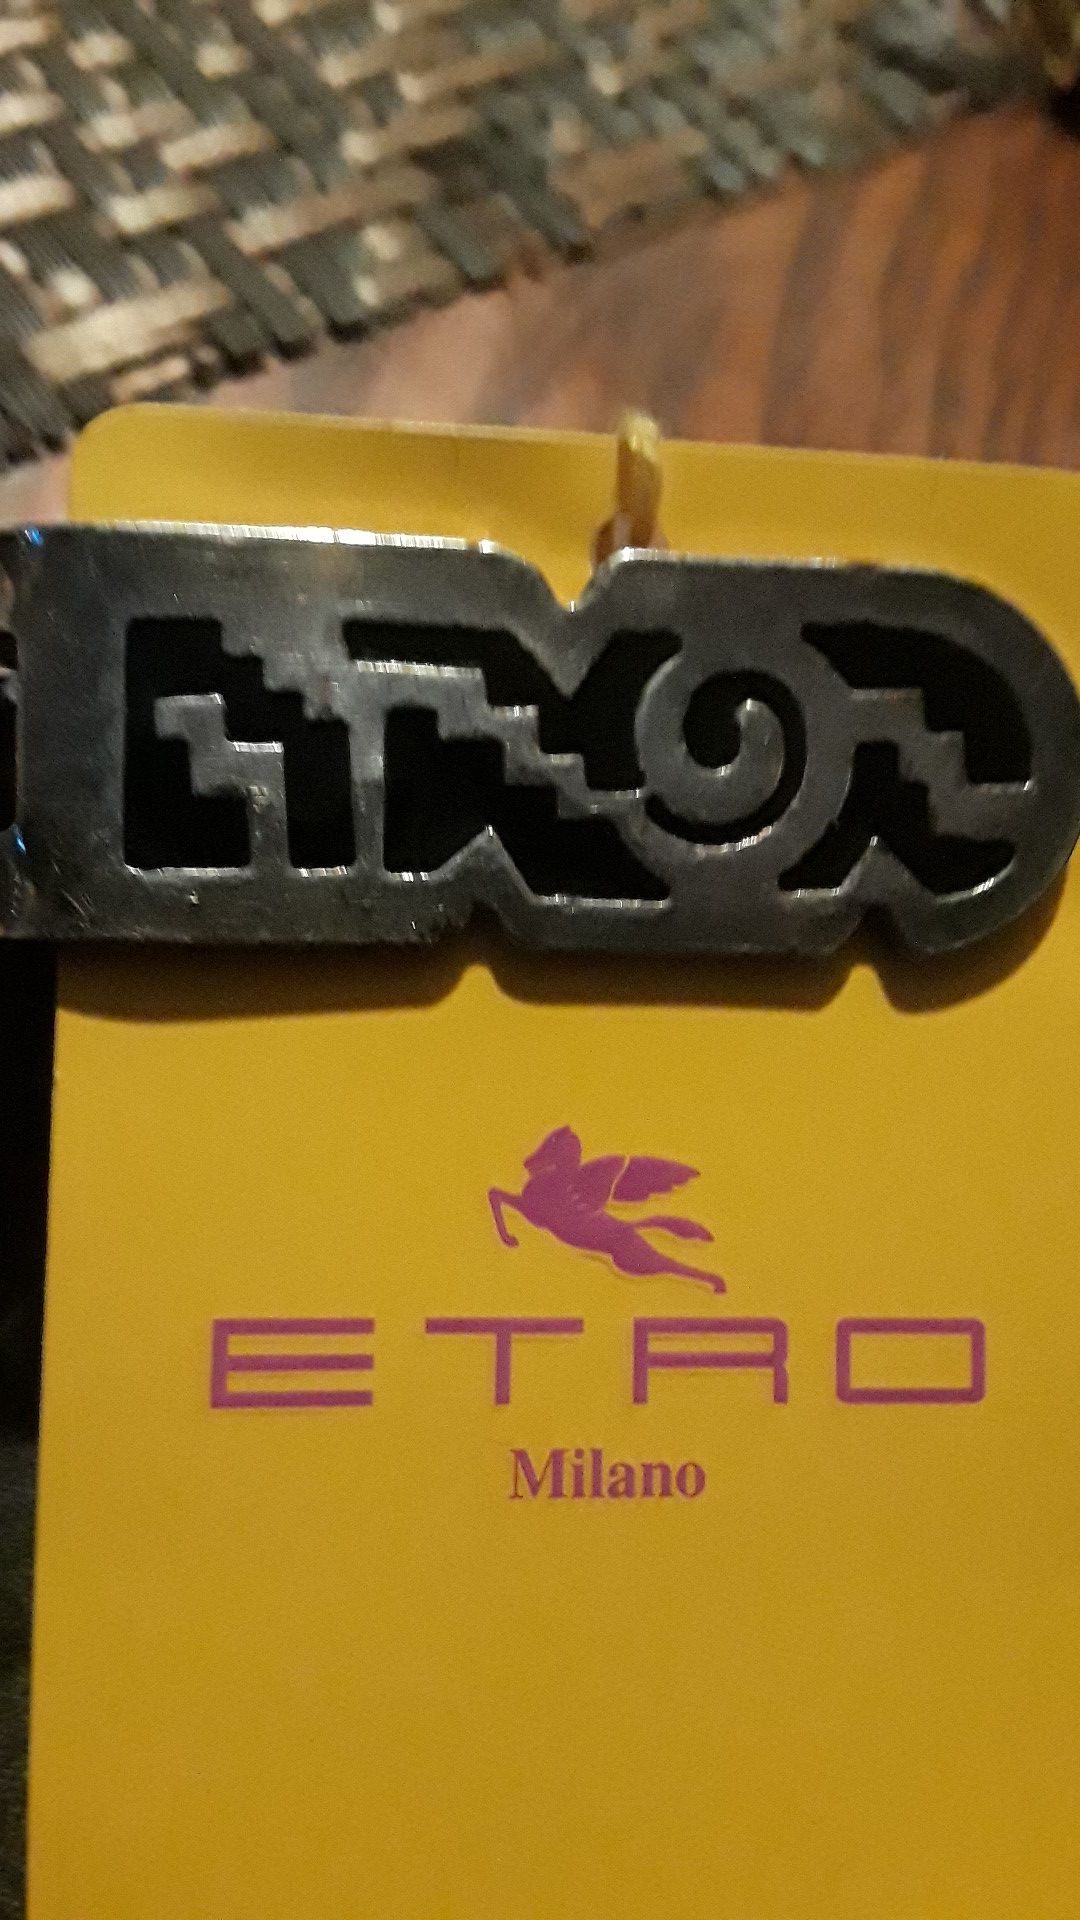 Absolutely Gorgeous Italian Designer's ETRO MILANO money clip. Made in Italy.